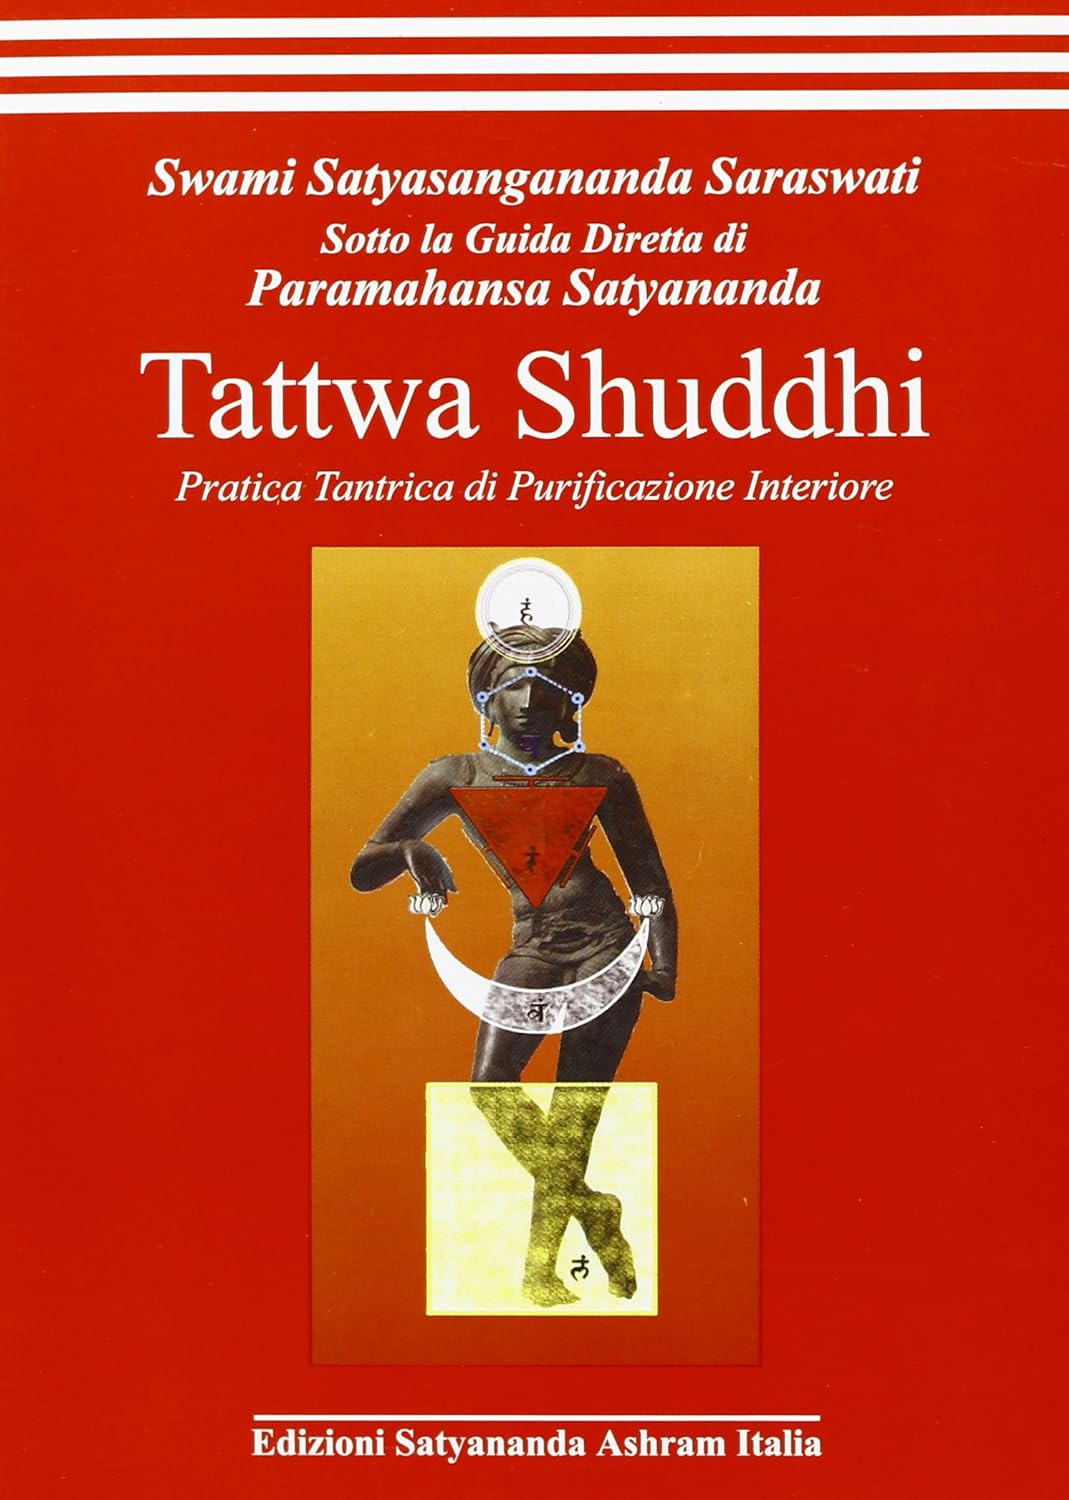 Tattwa Shuddi. Pratica tantrica di purificazione interiore - Swami Satyasangananda Saraswati